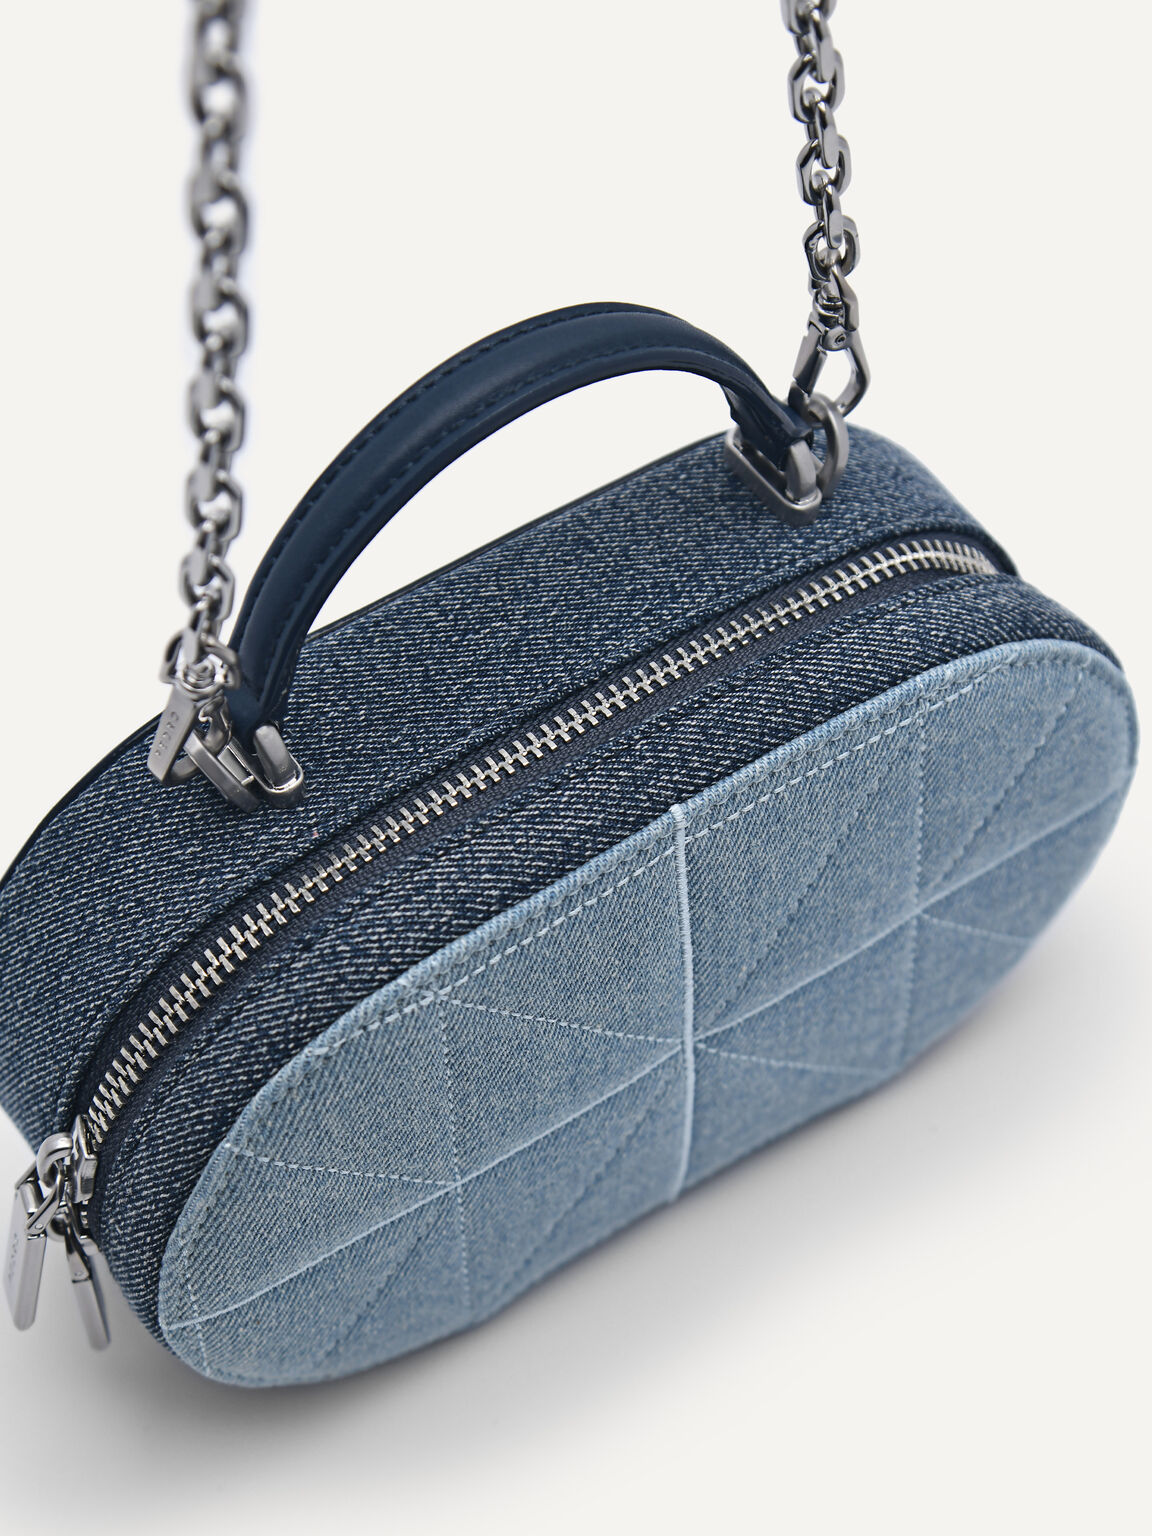 PEDRO Studio Cara Leather Mini Shoulder Bag in Pixel - Red